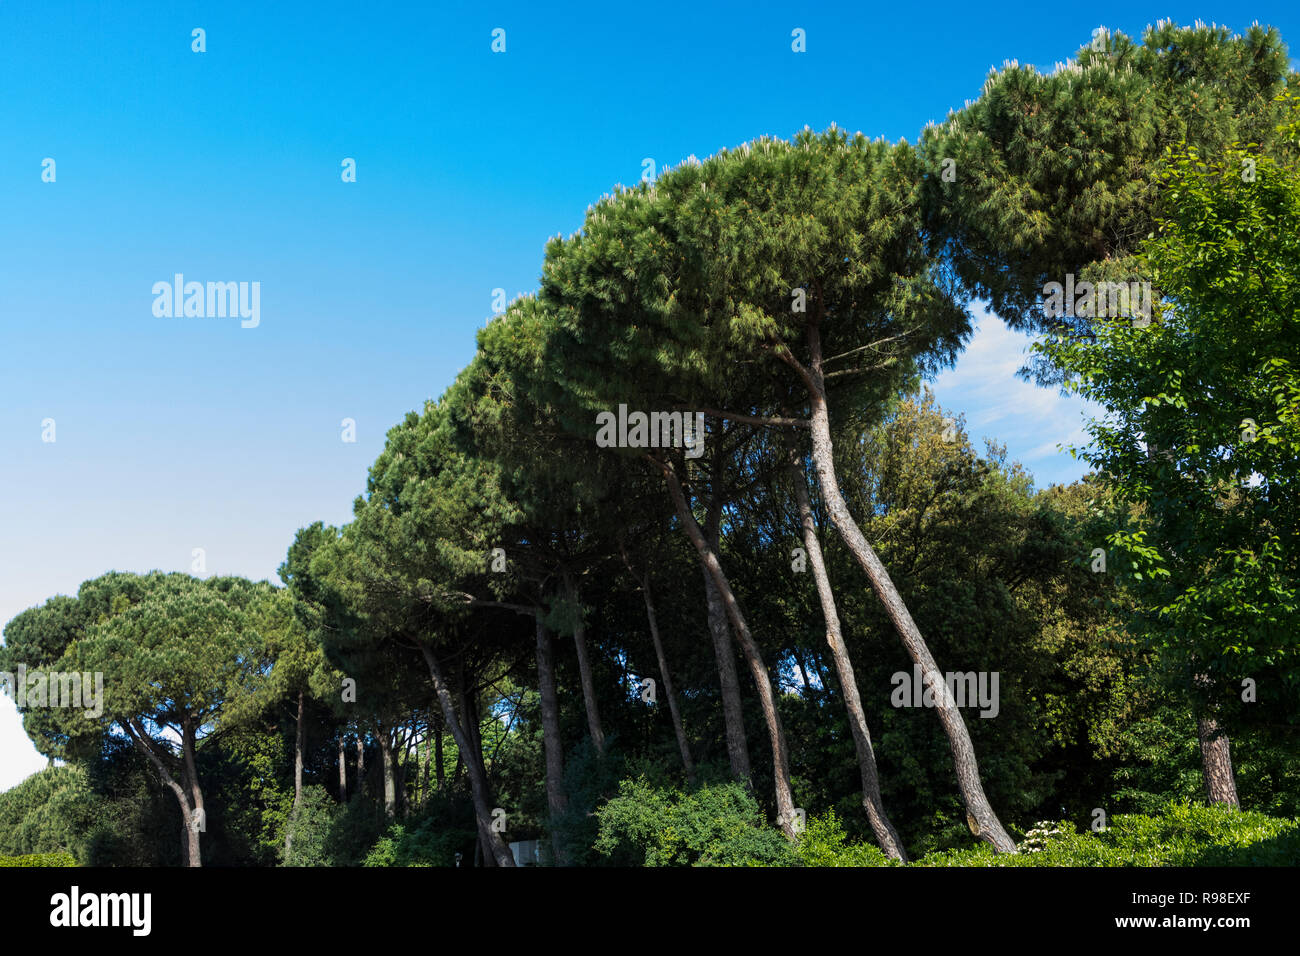 Row of umbrella pine trees in Ravenna Stock Photo